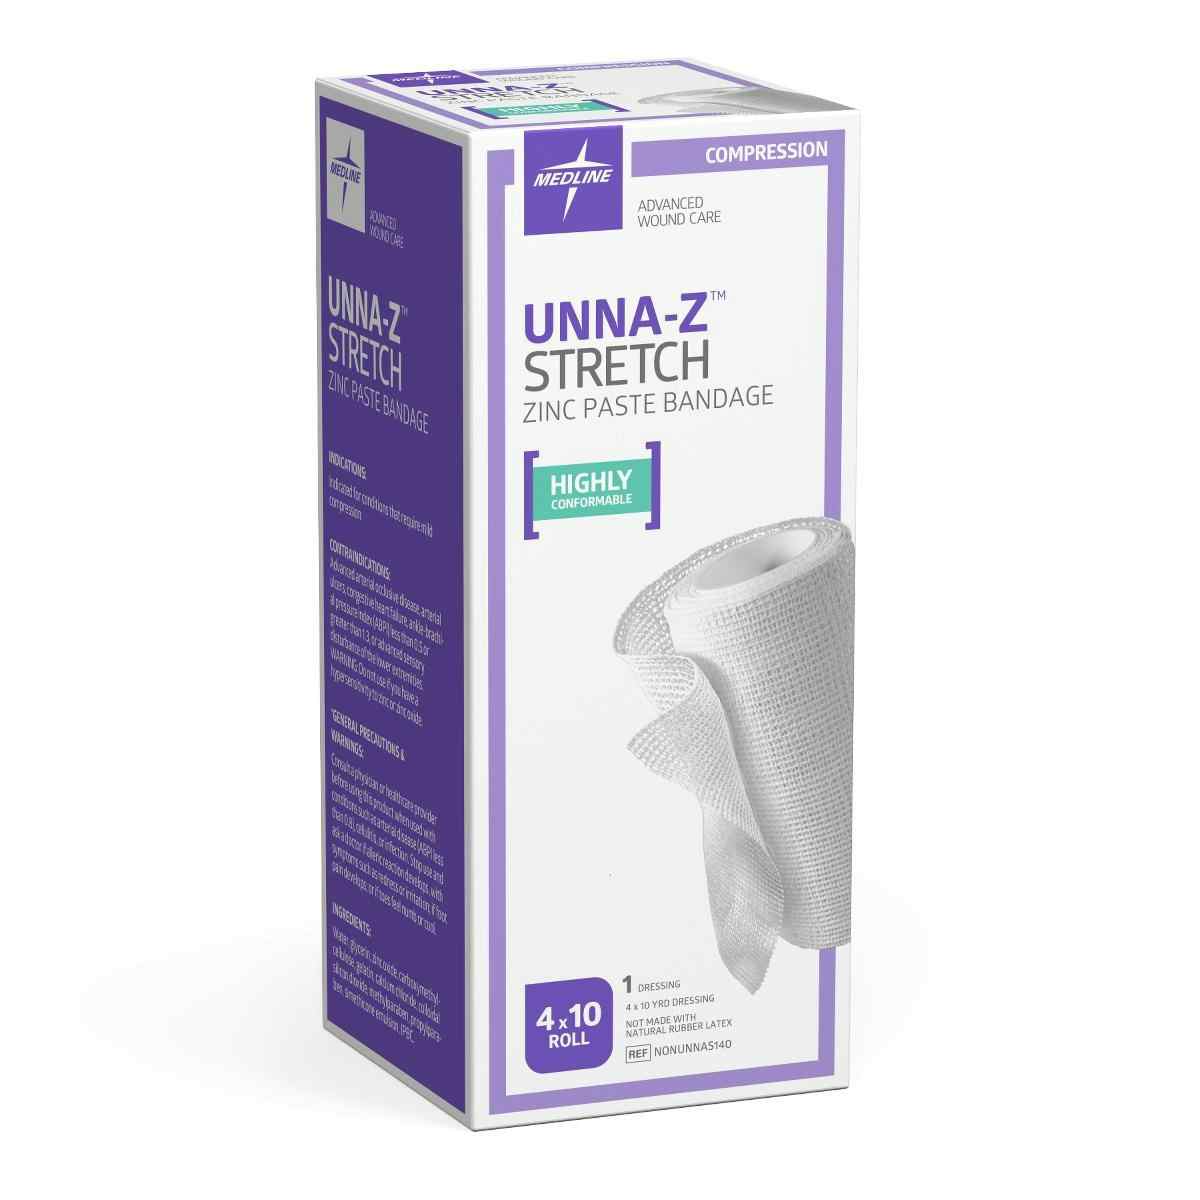 Medline Unna-Z Stretch Zinc Paste Bandage , NONUNNAS140H, 4" X 10 yd. - 1 Roll 